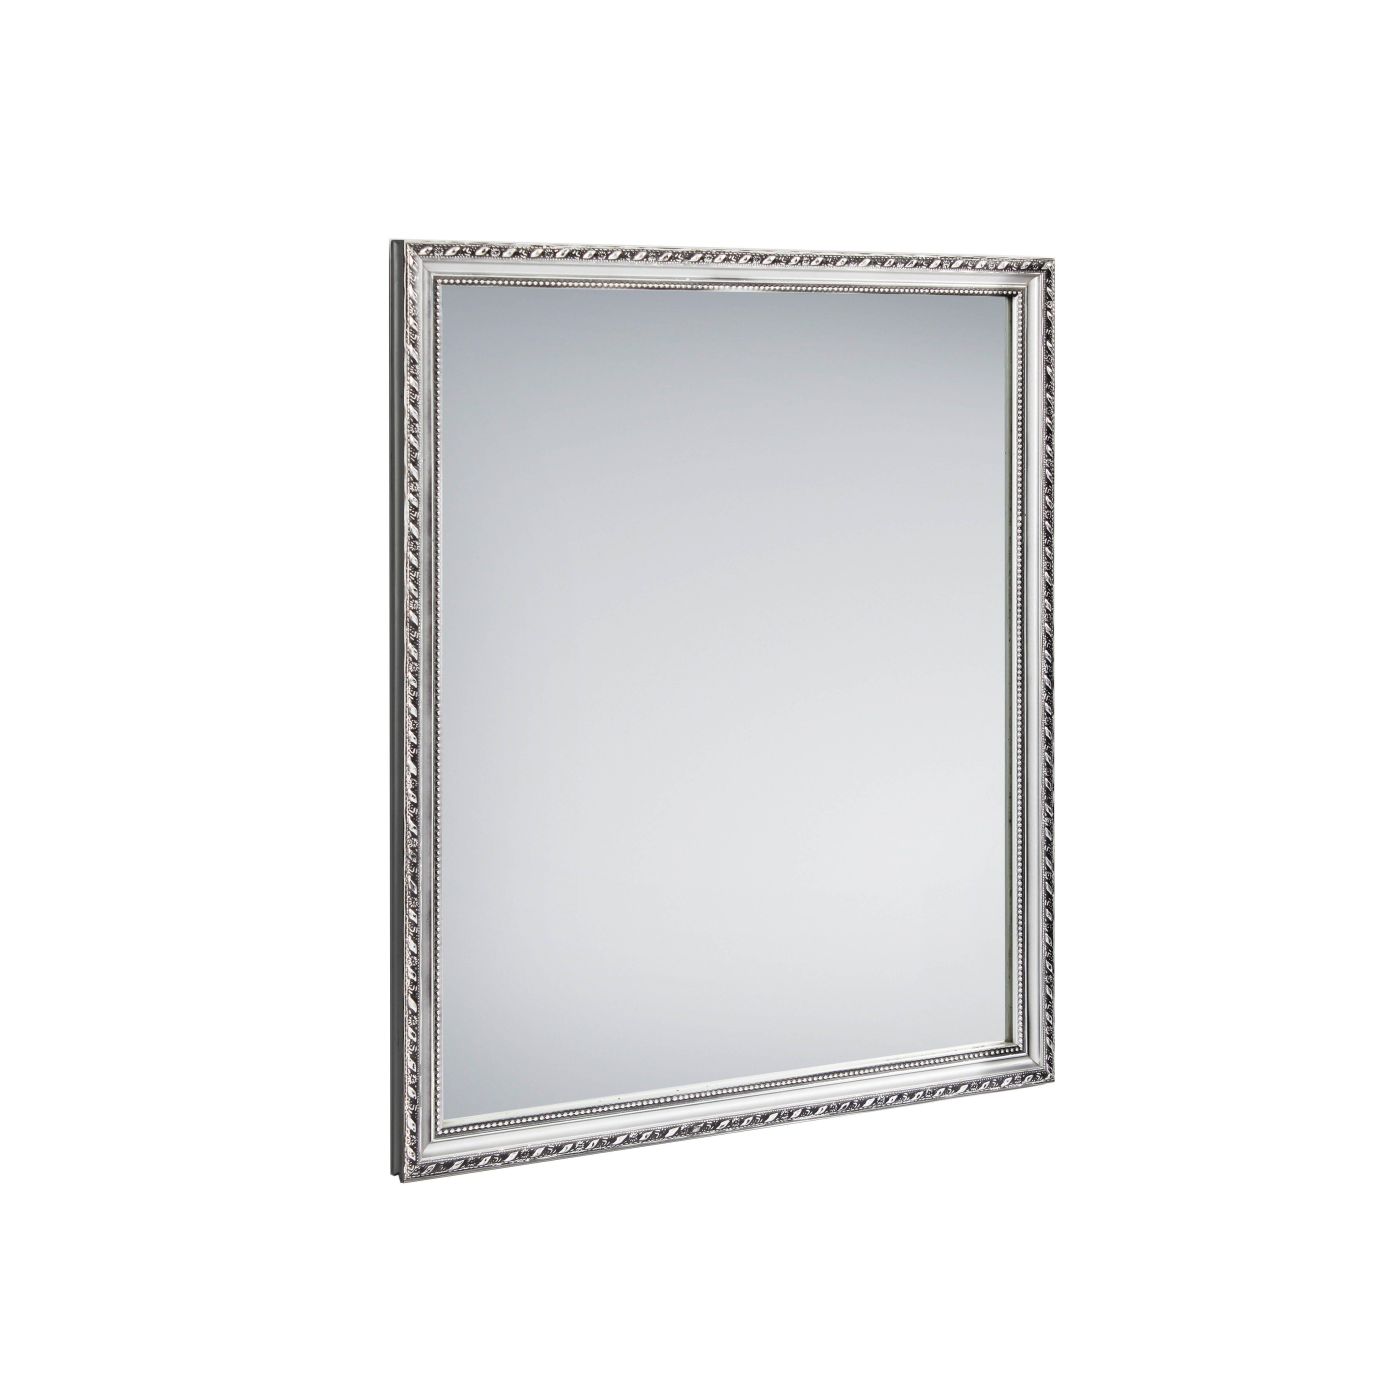 Rahmenspiegel LORELY, silber, 34x45 cm